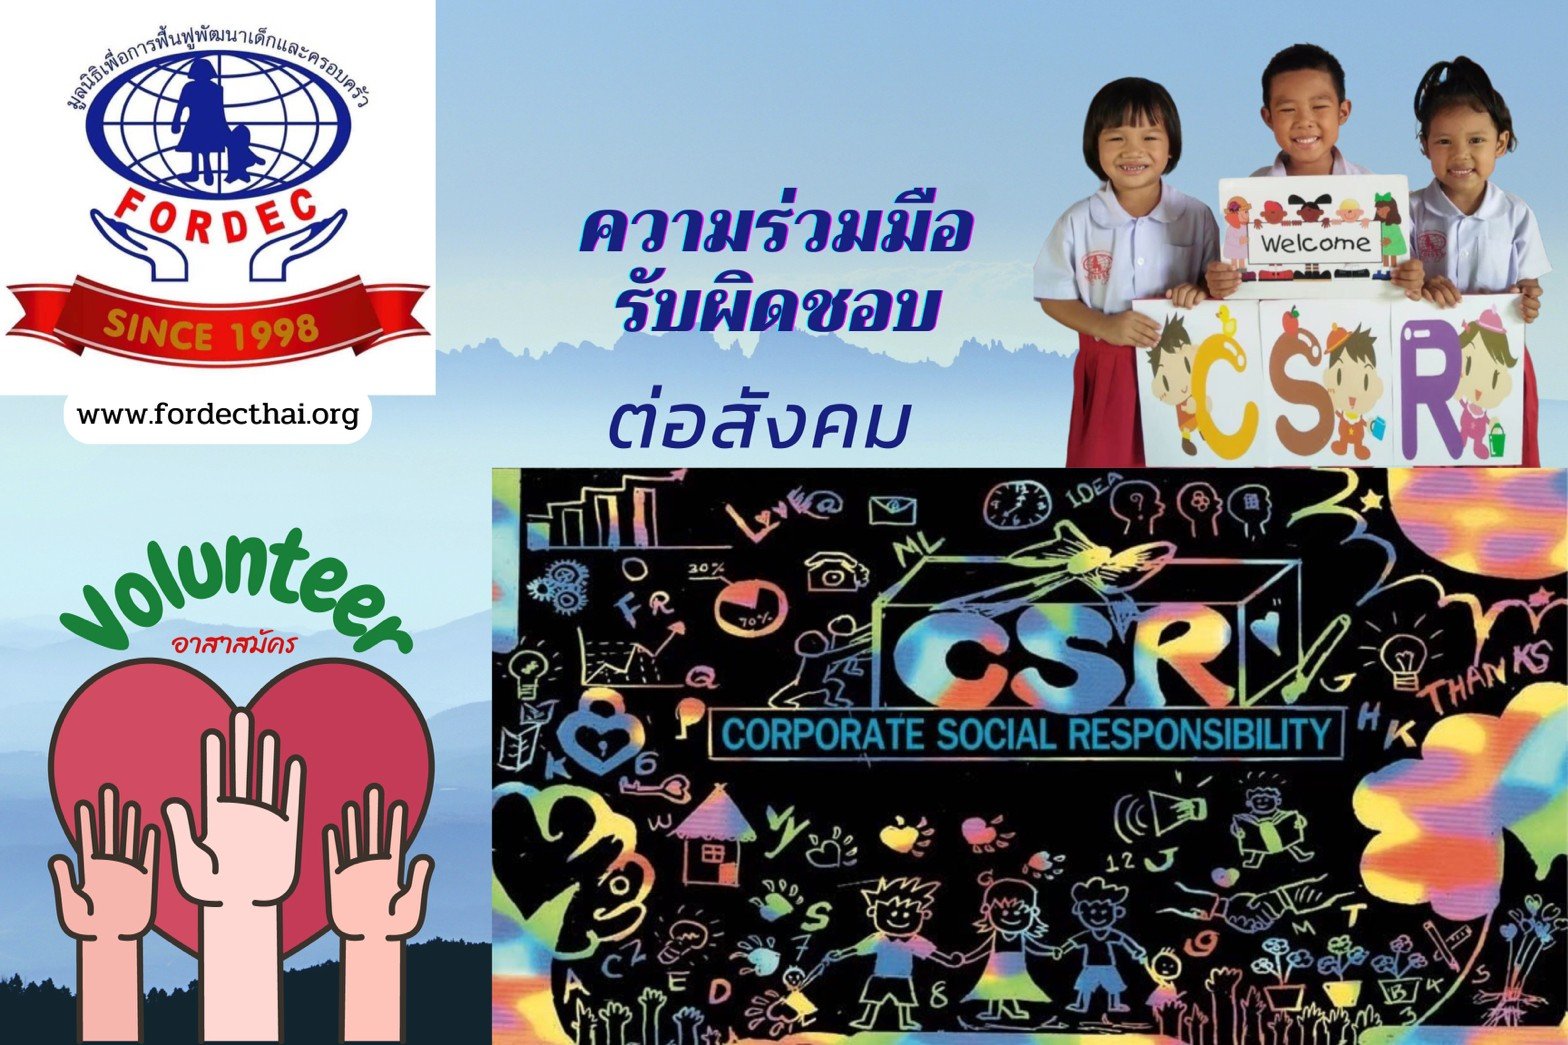 Corporate social responsibility (CSR) & Volunteer